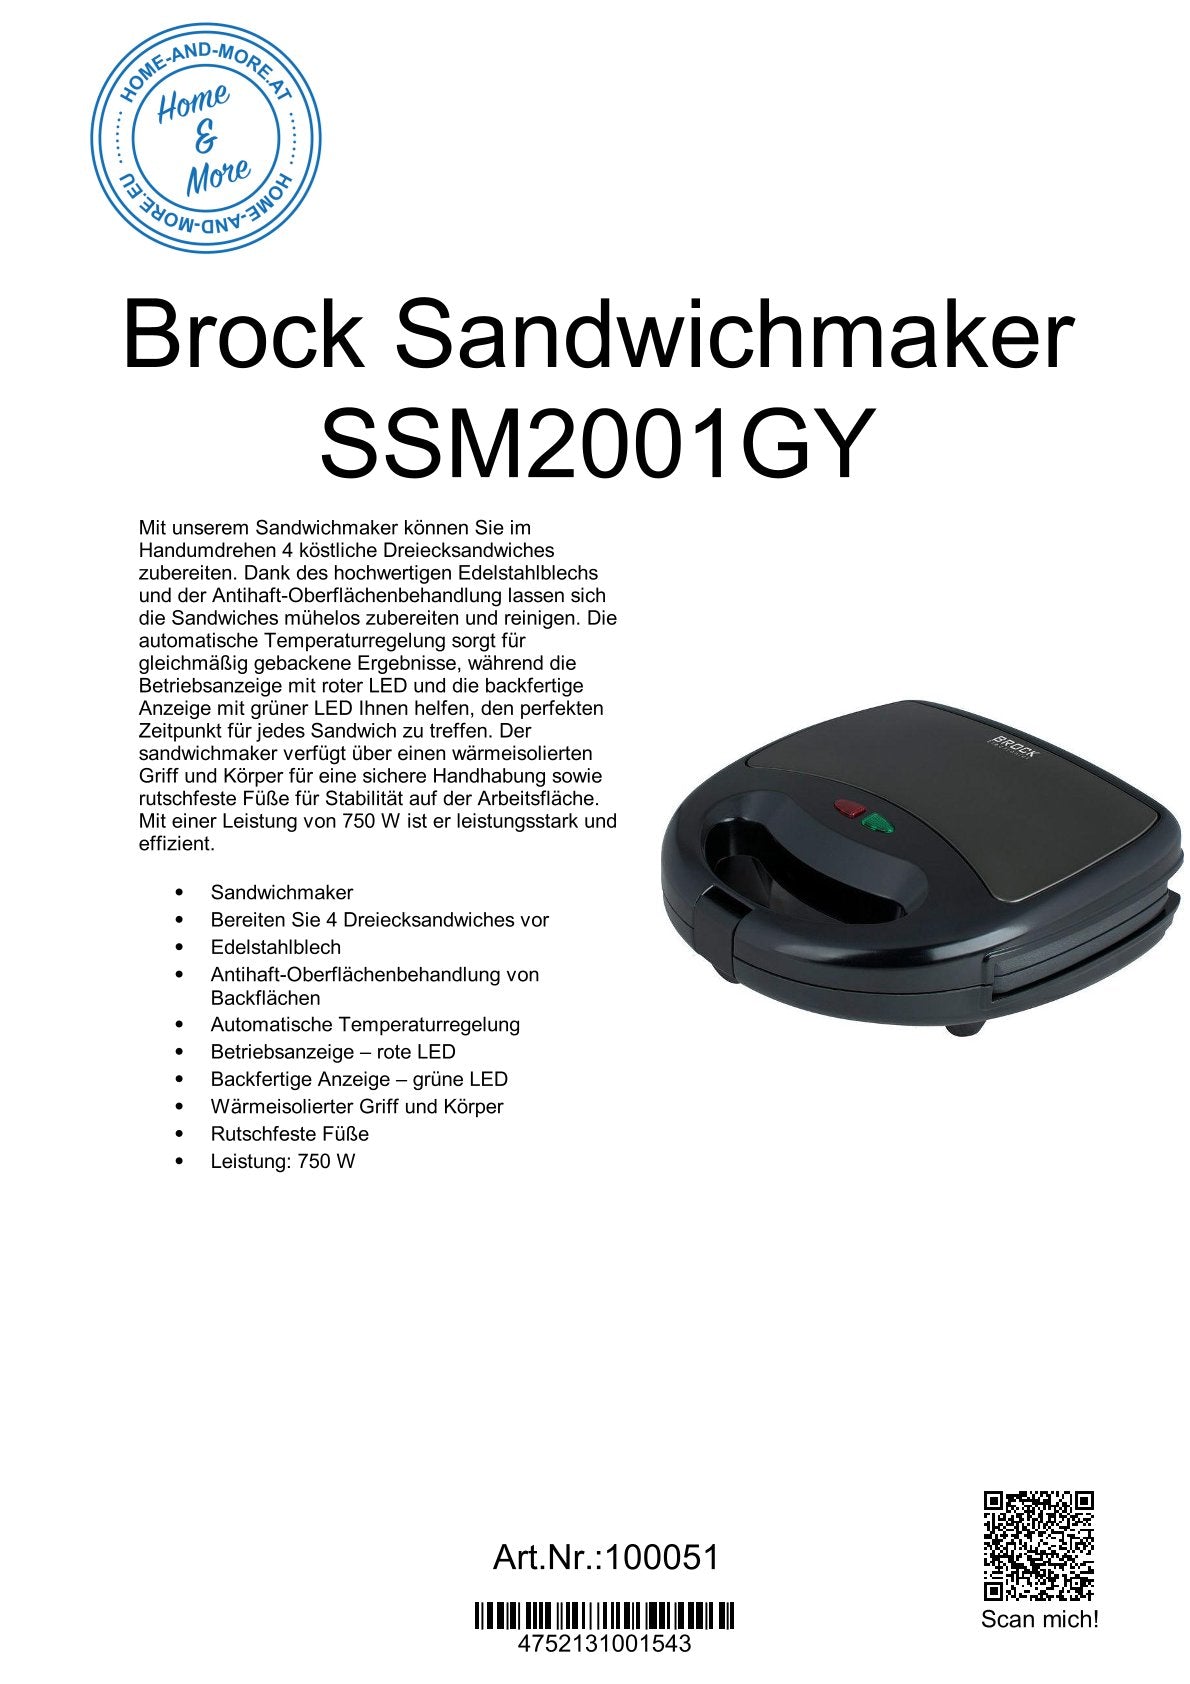 Brock Sandwichmaker SSM2001GY